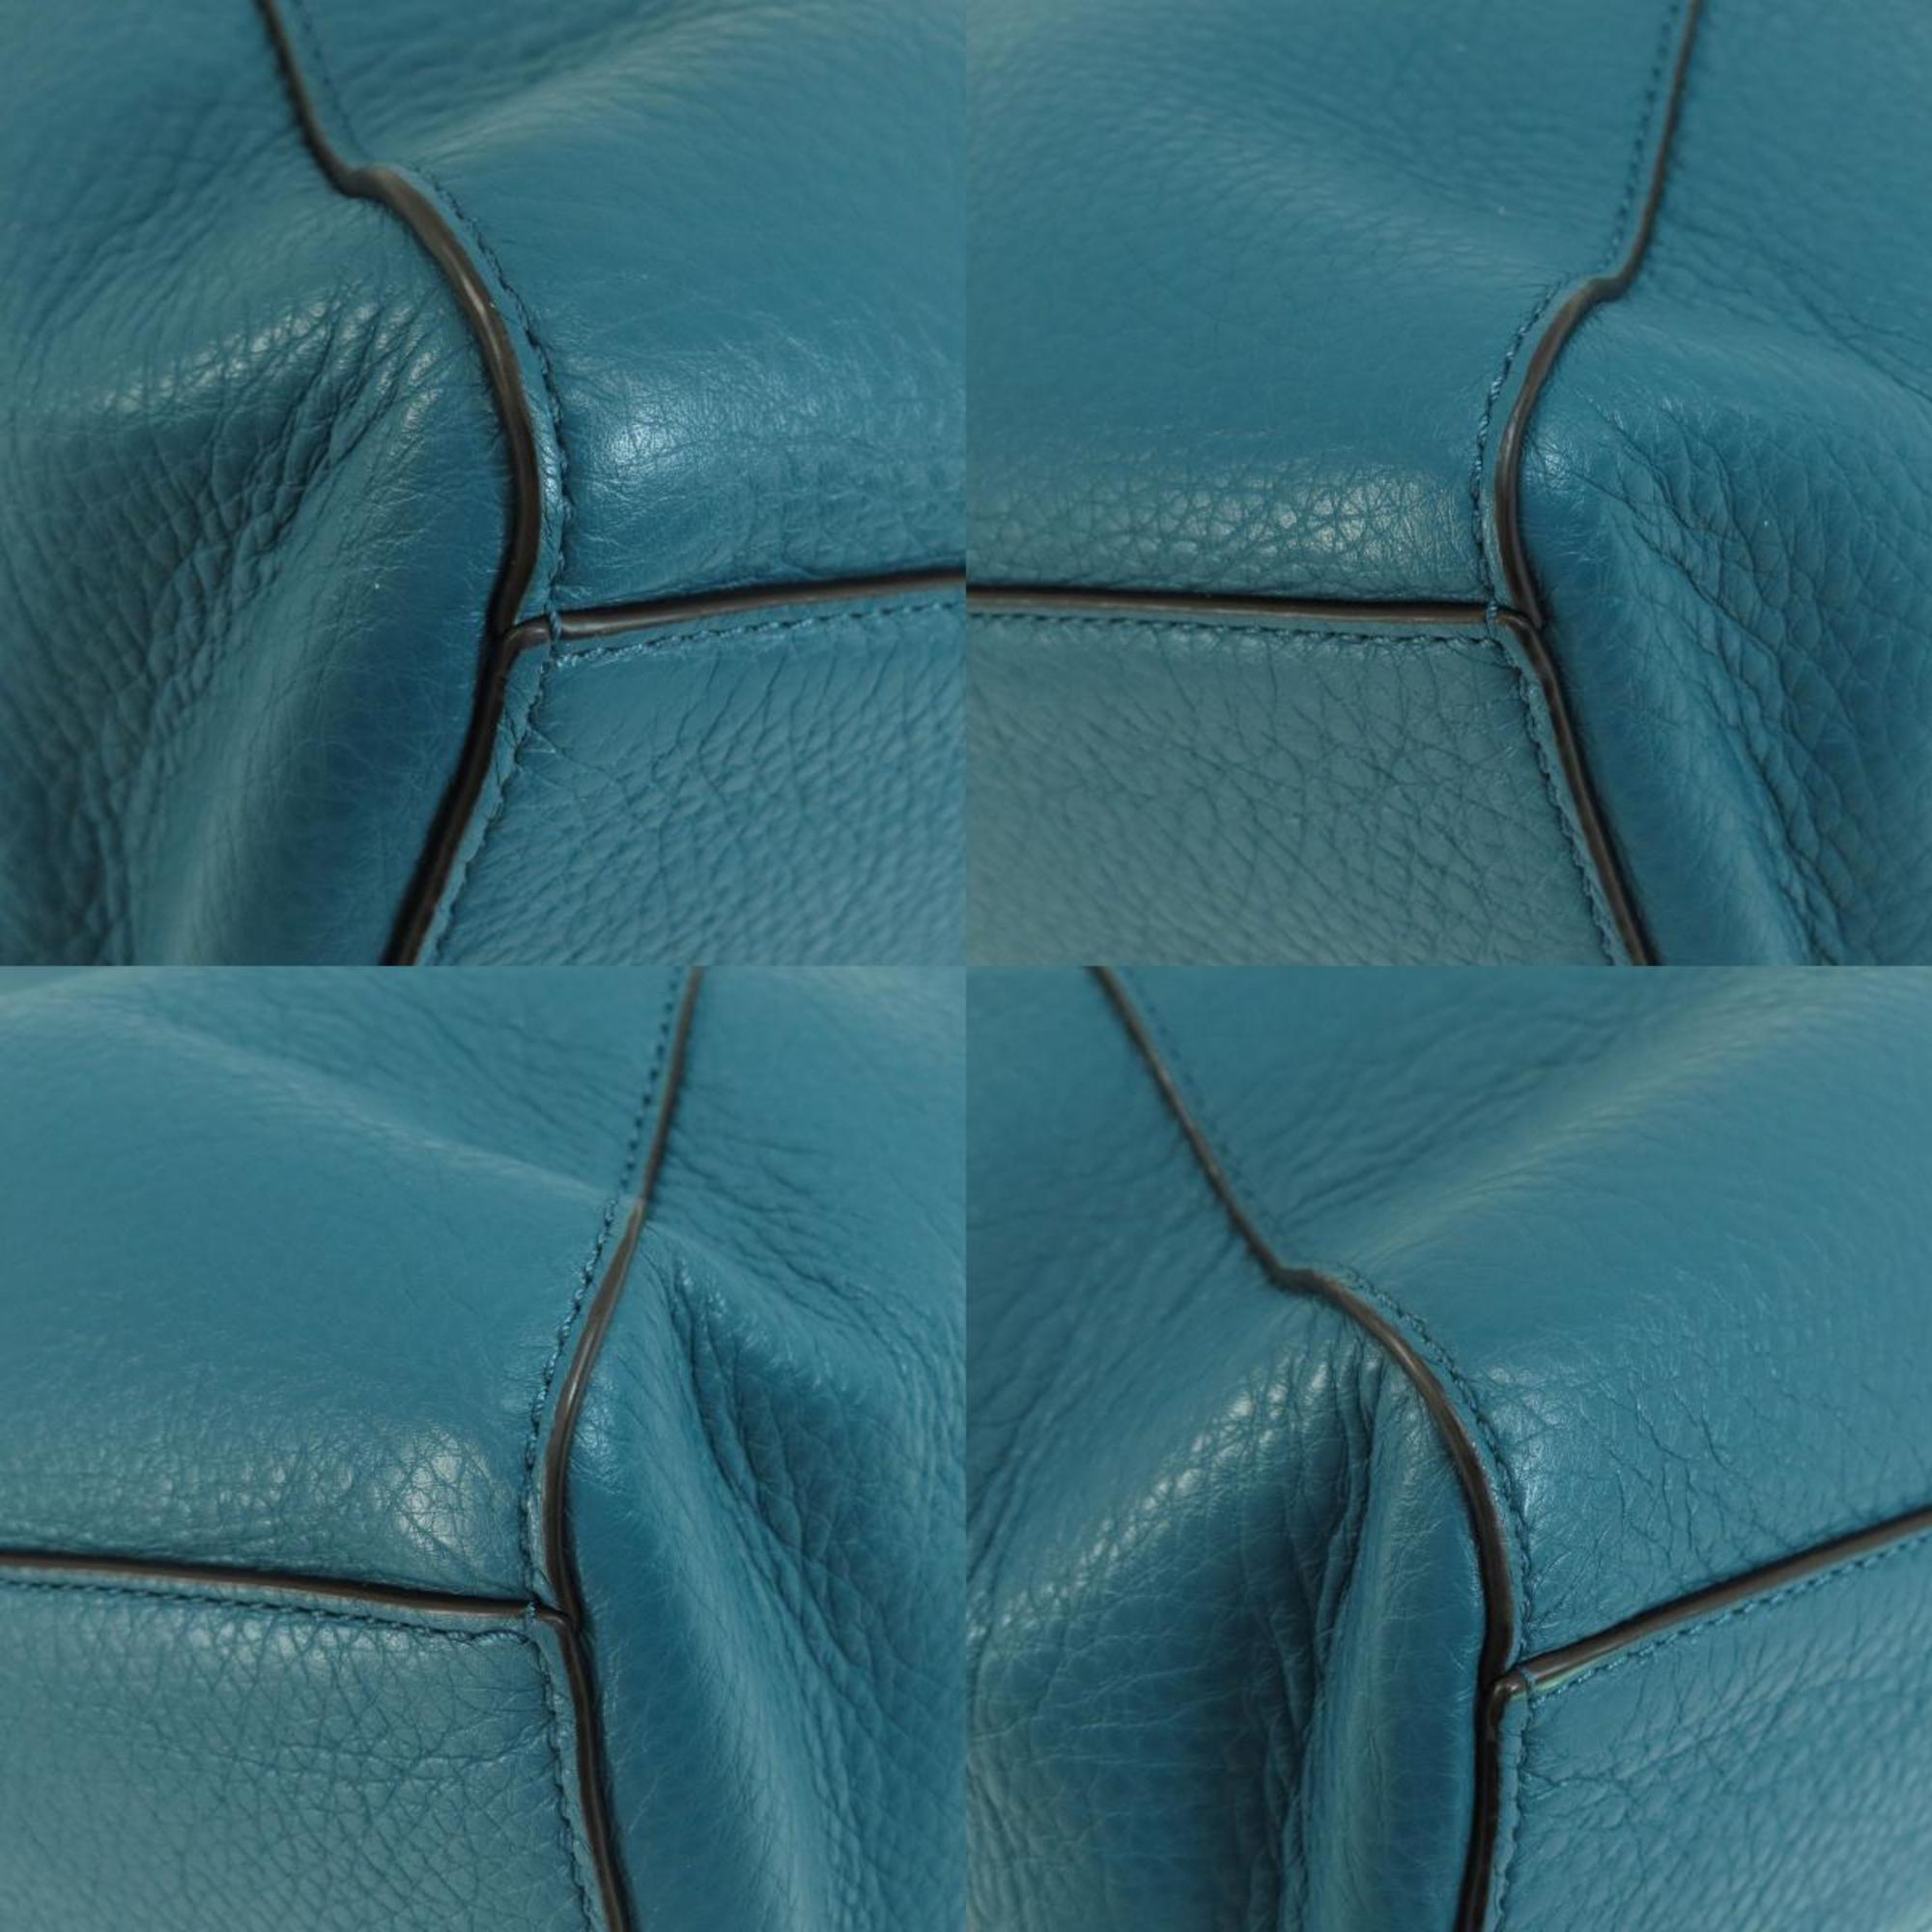 Coach F36675 handbag leather ladies